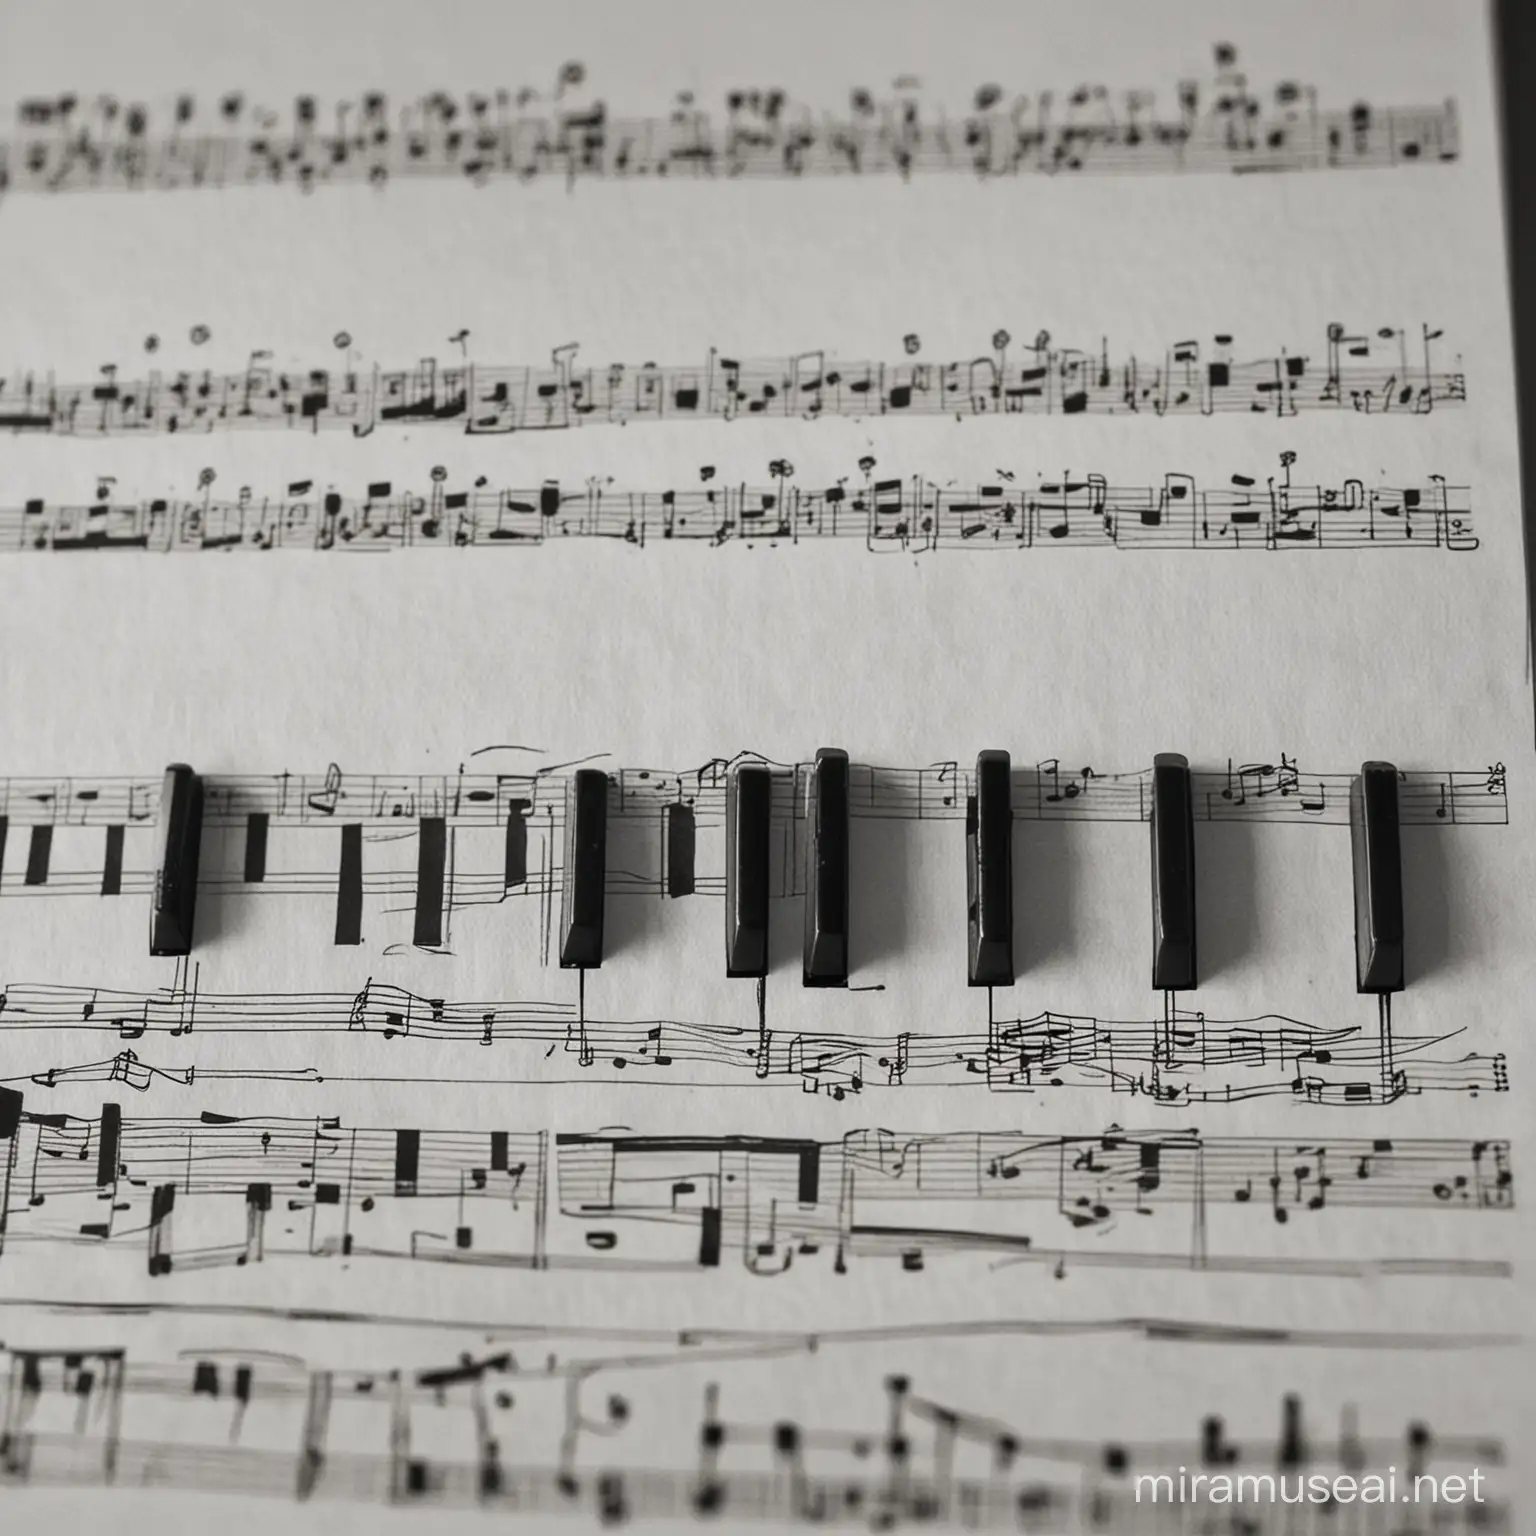 Grand Piano on Classical Musical Score